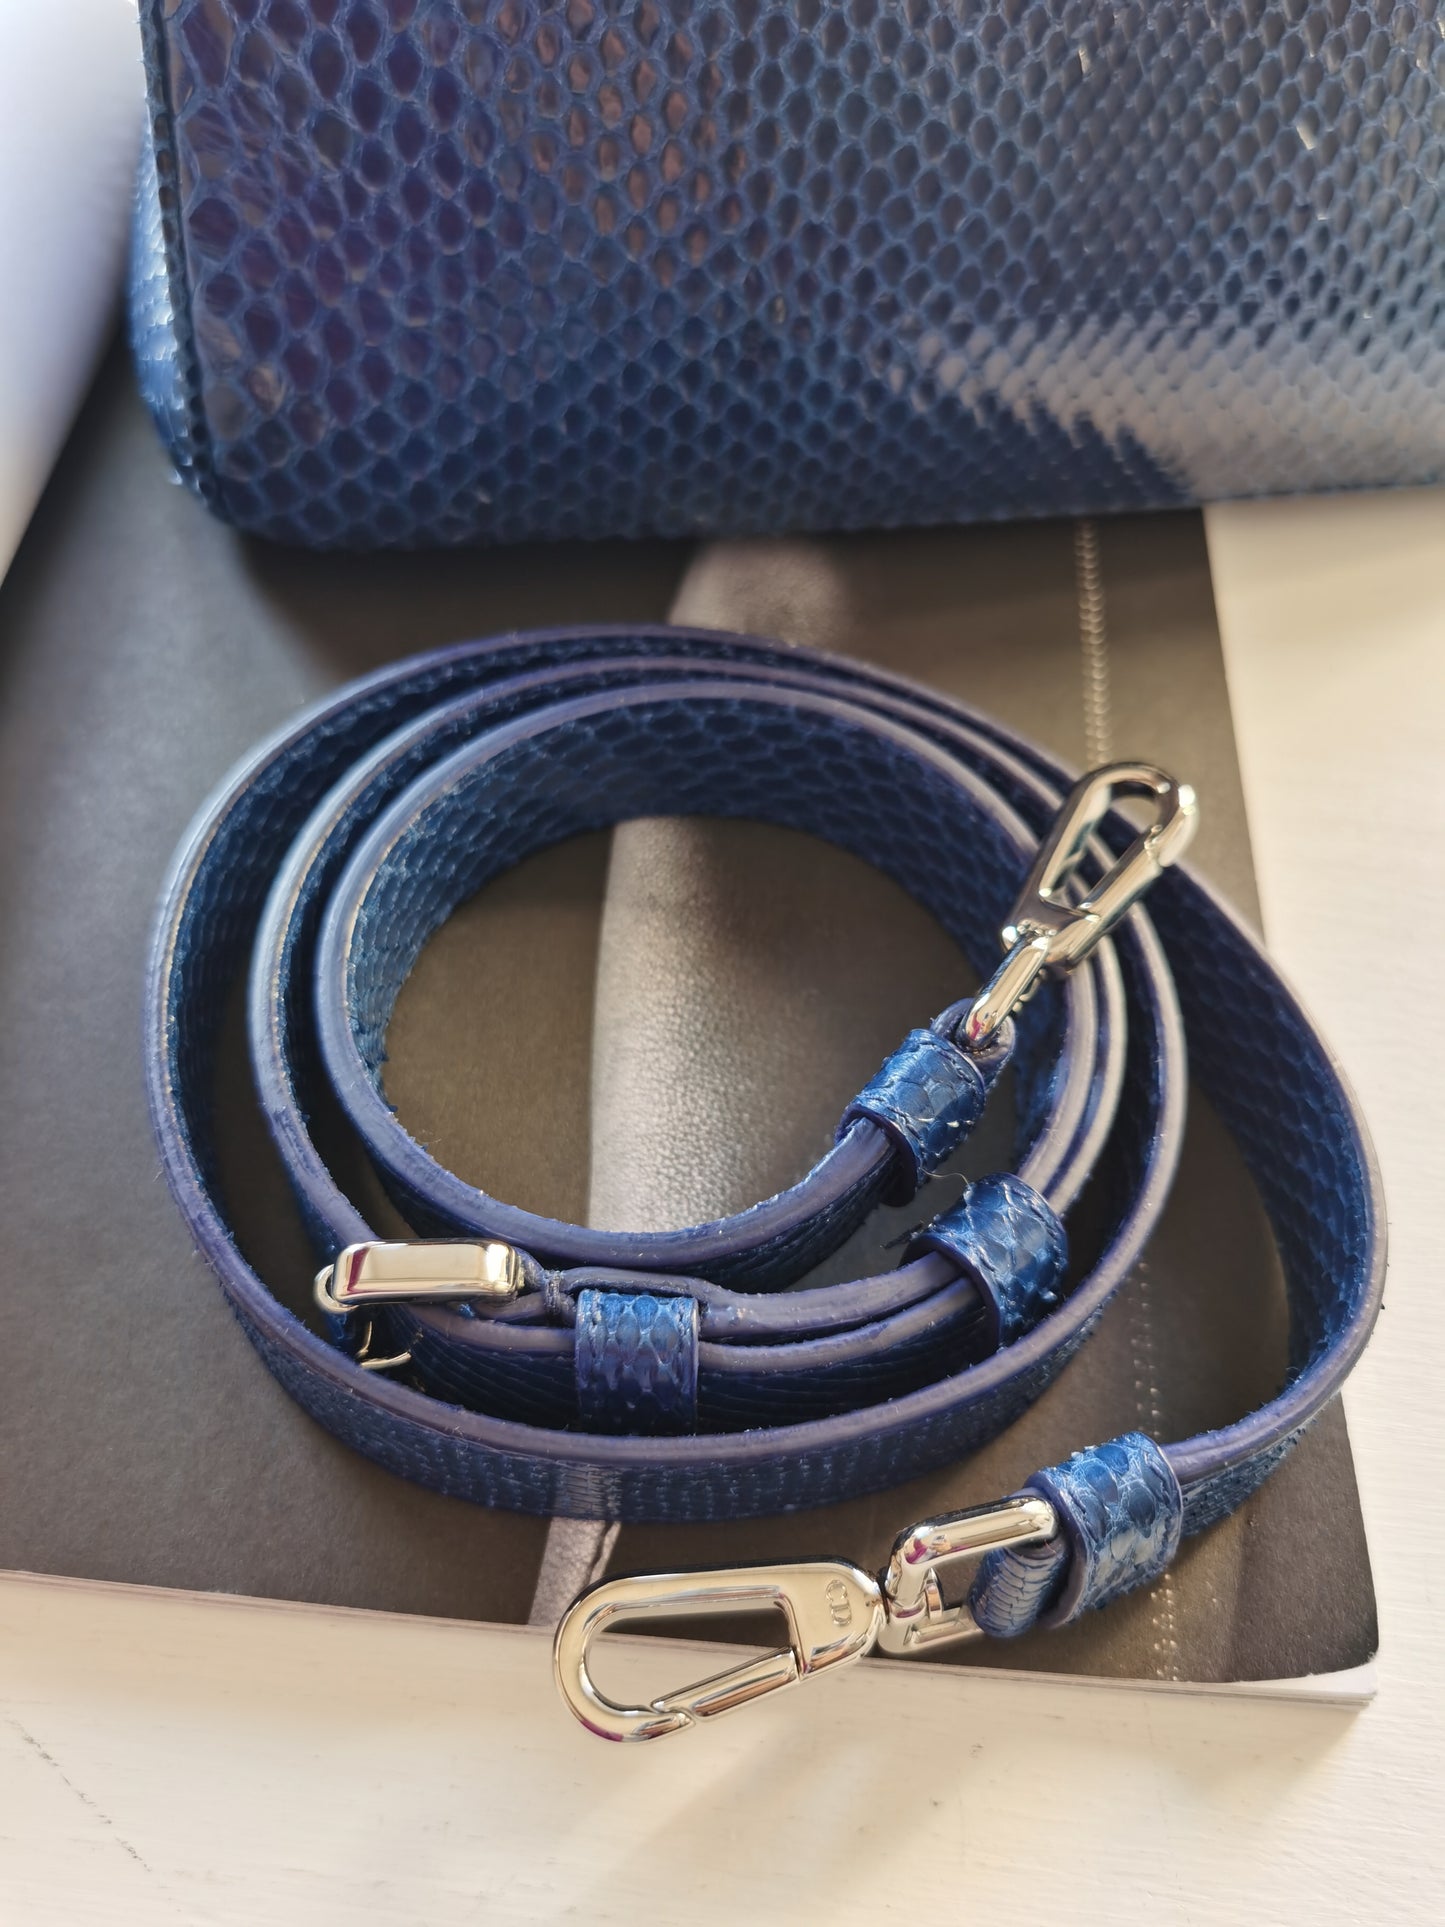 Christian Dior Be Dior flap bag in metallic Blue python.